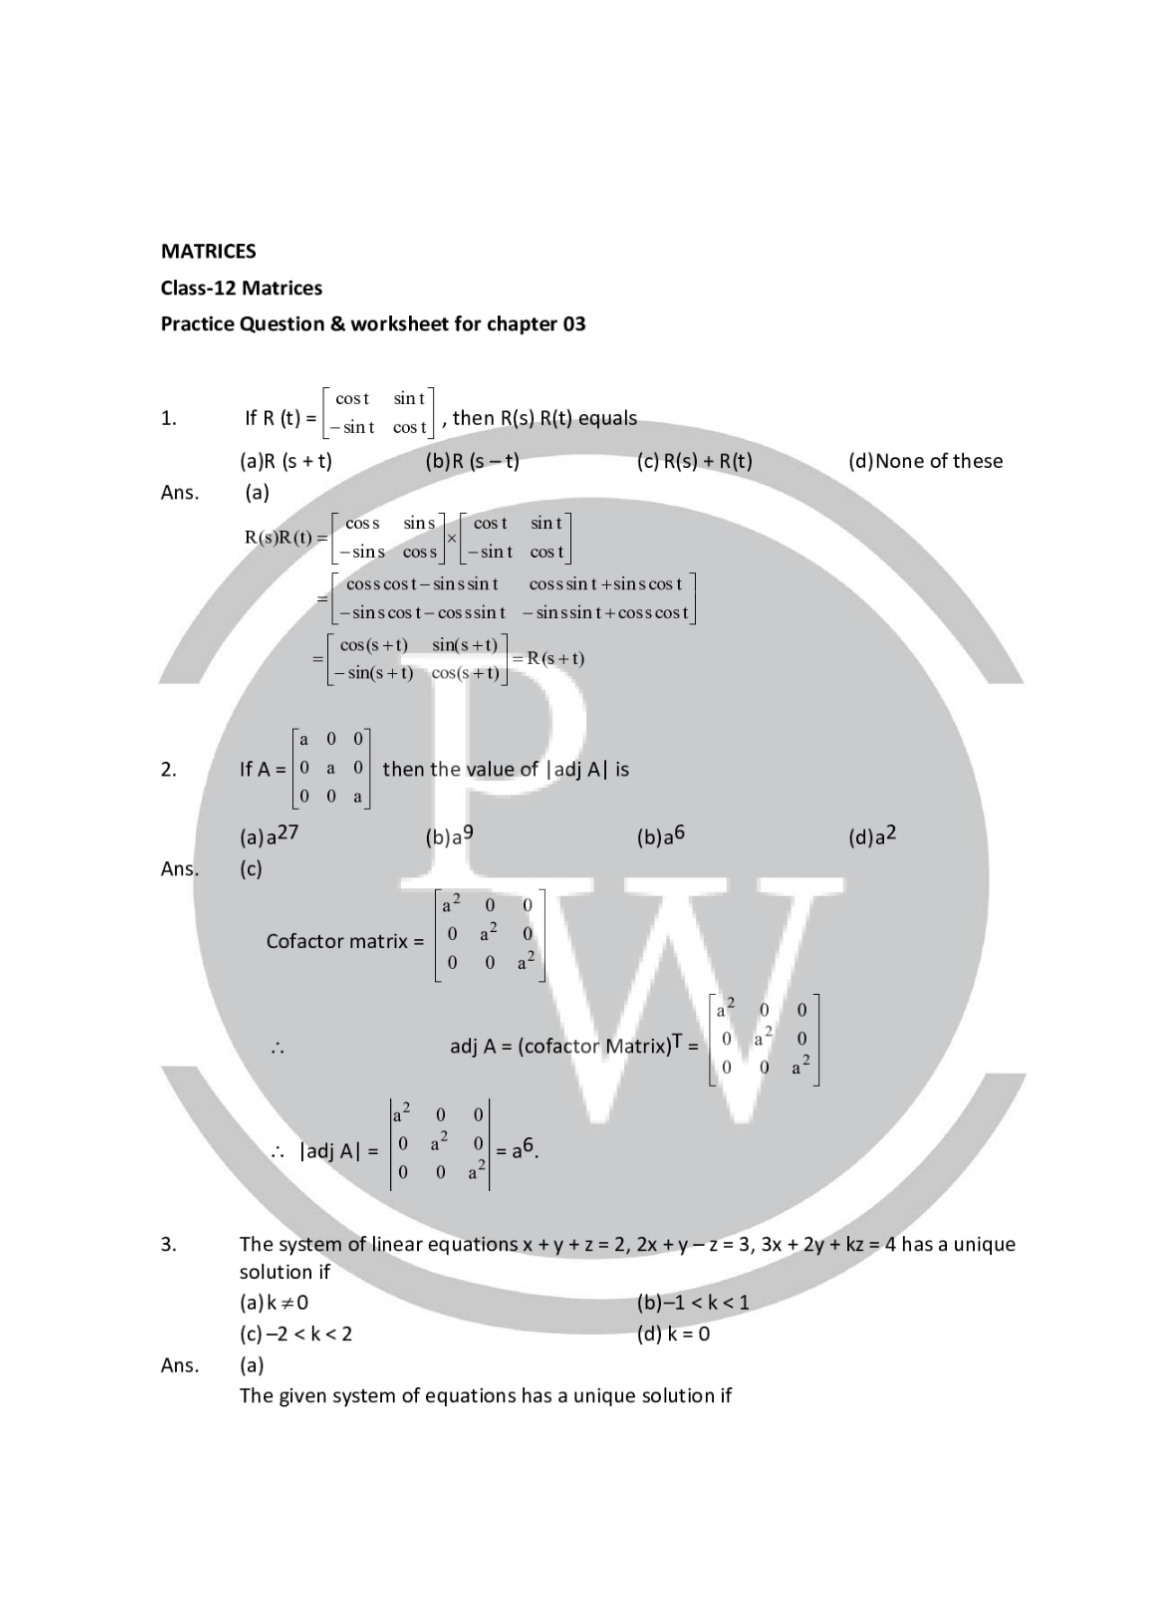 Practice worksheet of matrices-C89B0DB6-33D9-407A-A763-E04A95A5341B.jpeg